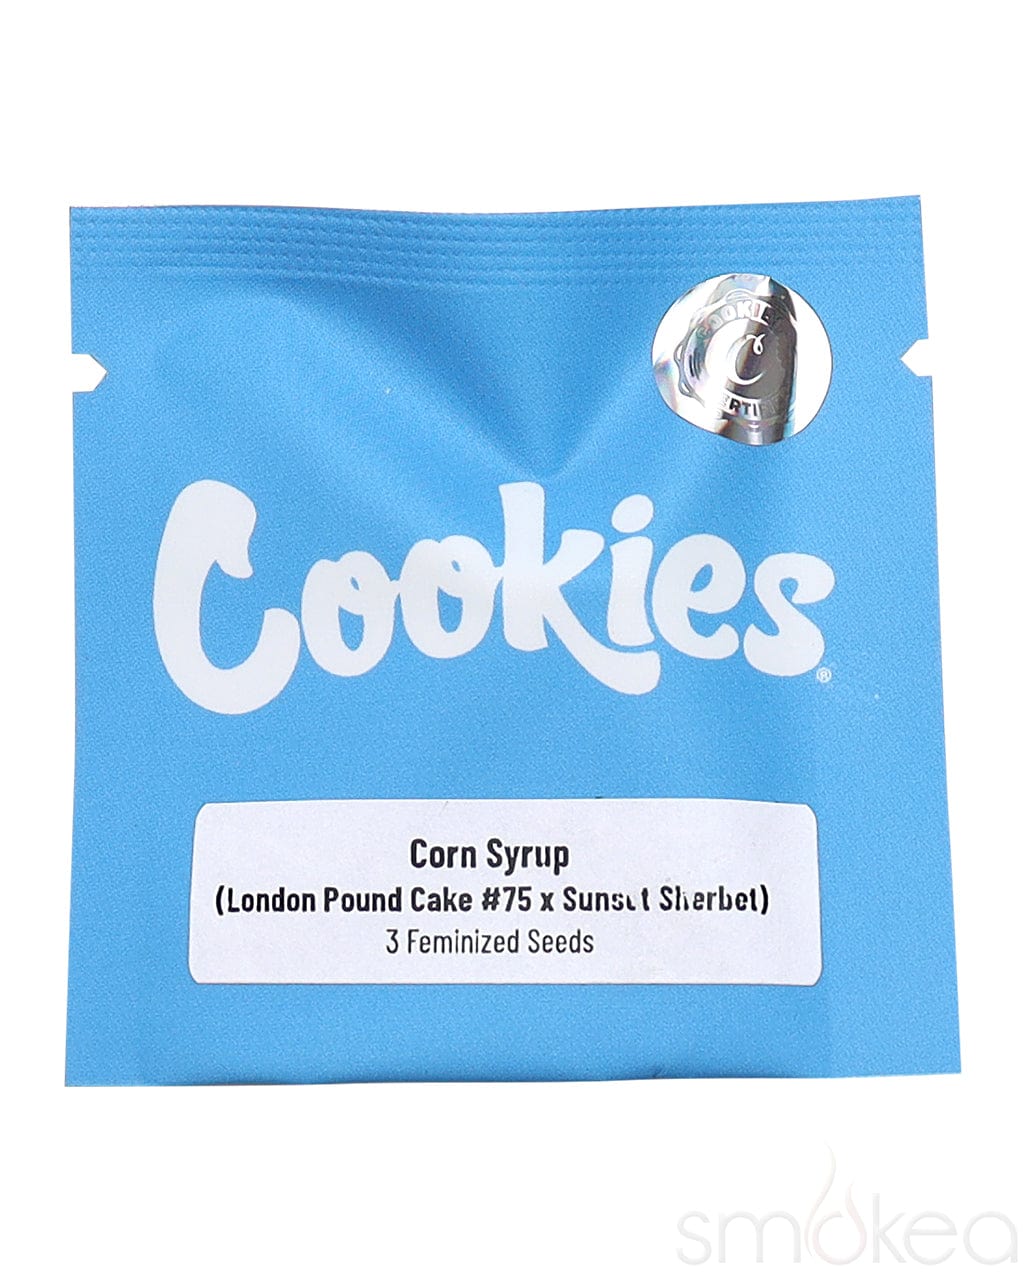 Cookies Cannabis Seeds - Corn Syrup